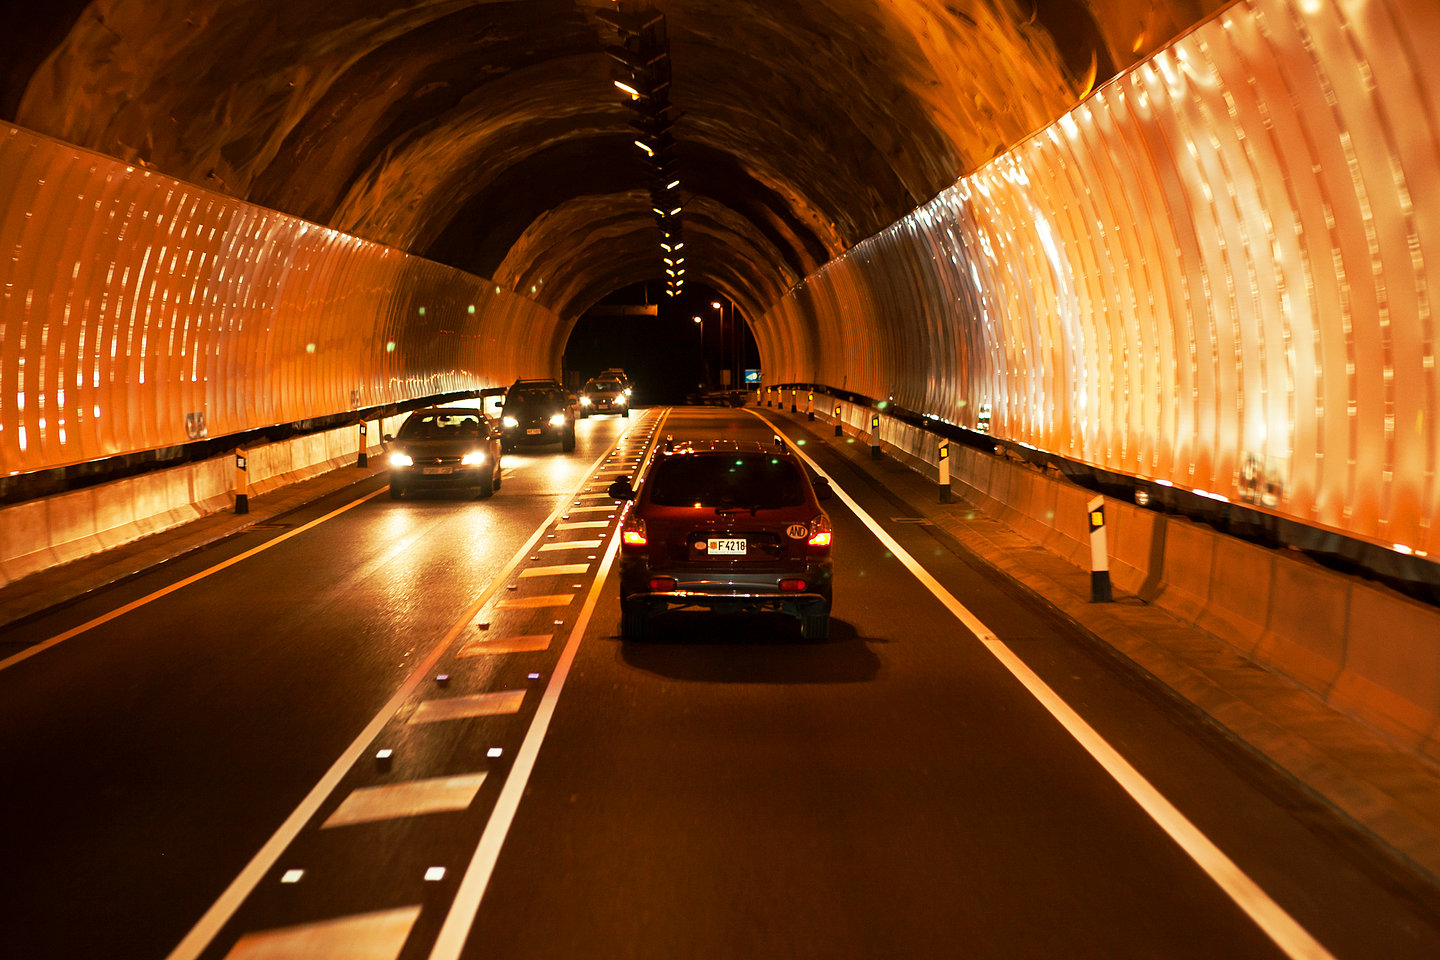 10) Tunnel